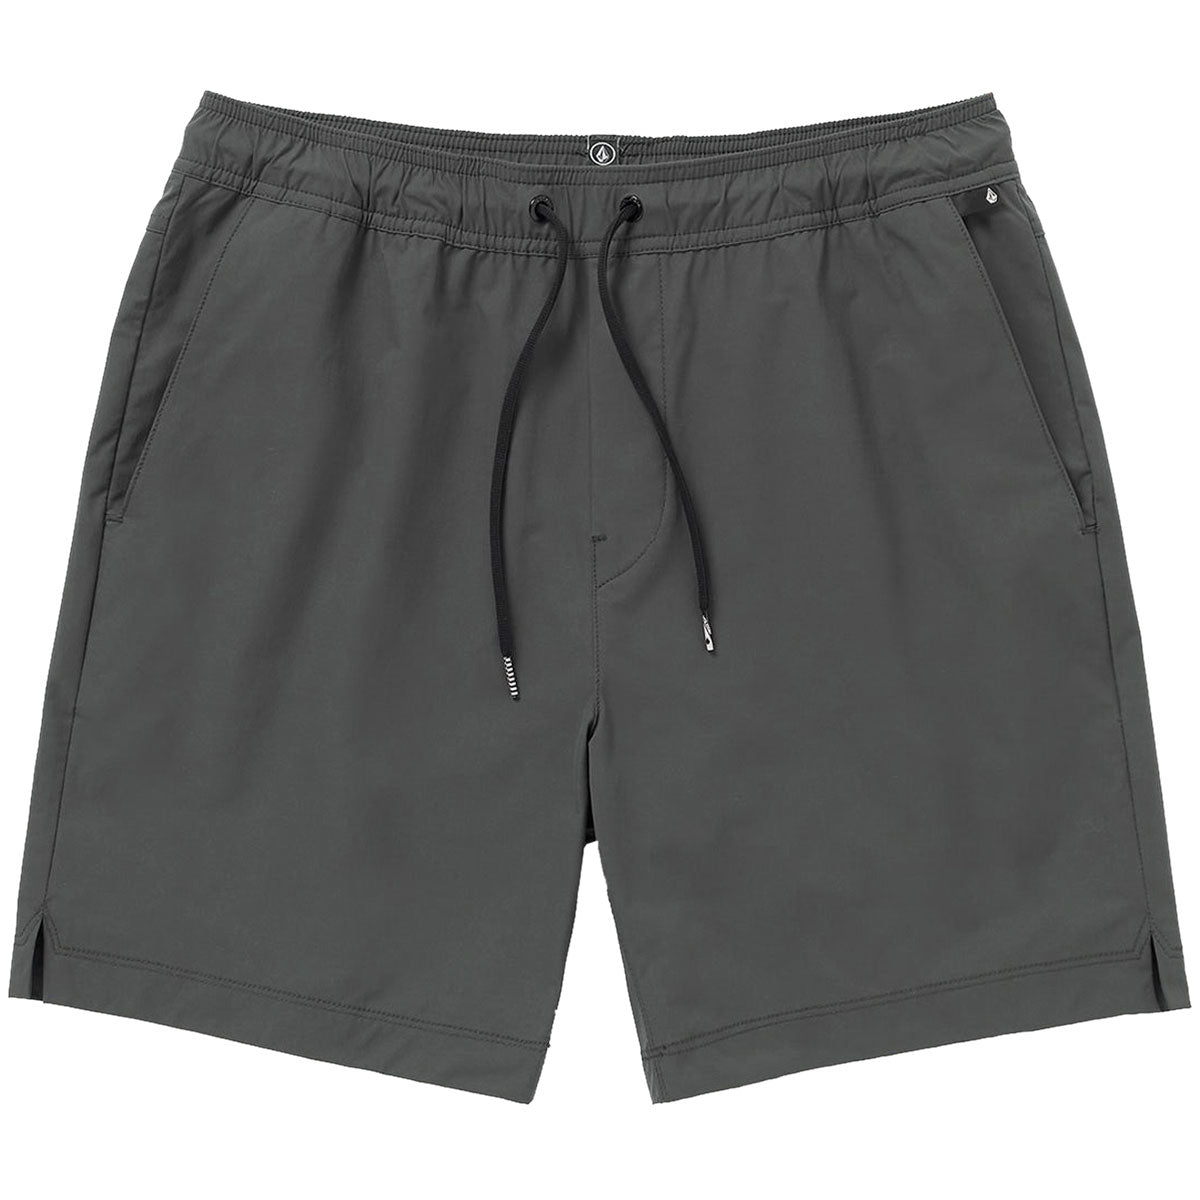 Volcom Hoxstop Ew 18 Shorts - Asphalt Black image 1